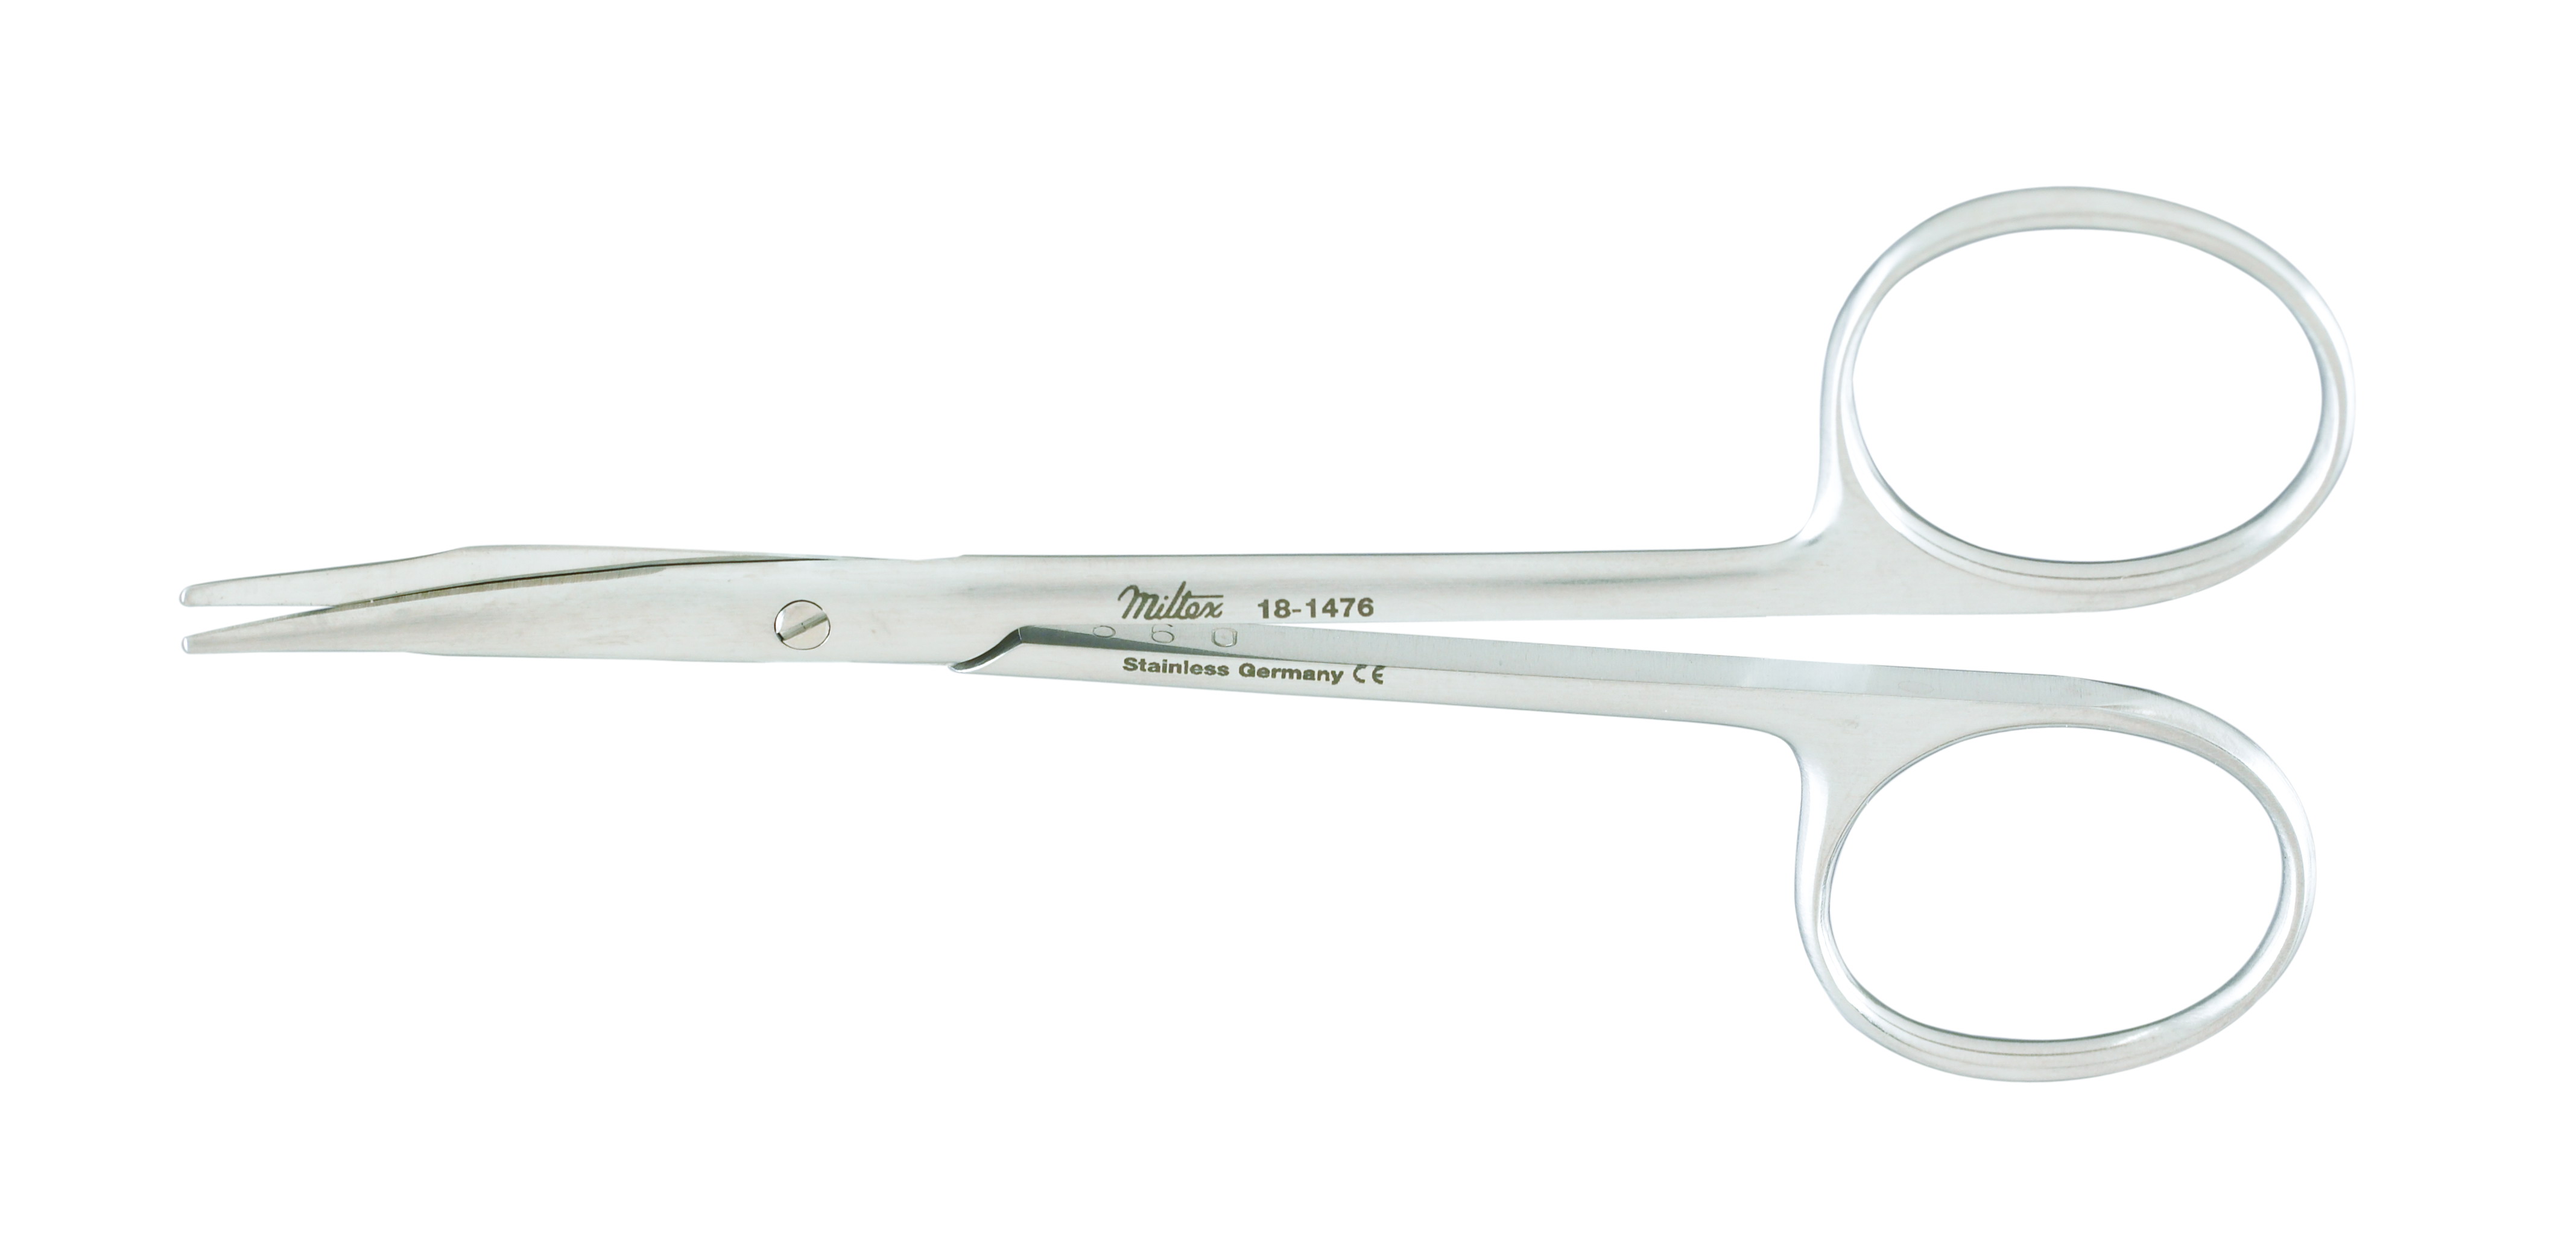 stevens-tenotomy-scissors-4-1-2-114-cm-curved-long-blade-blunt-point-18-1476-miltex.jpg